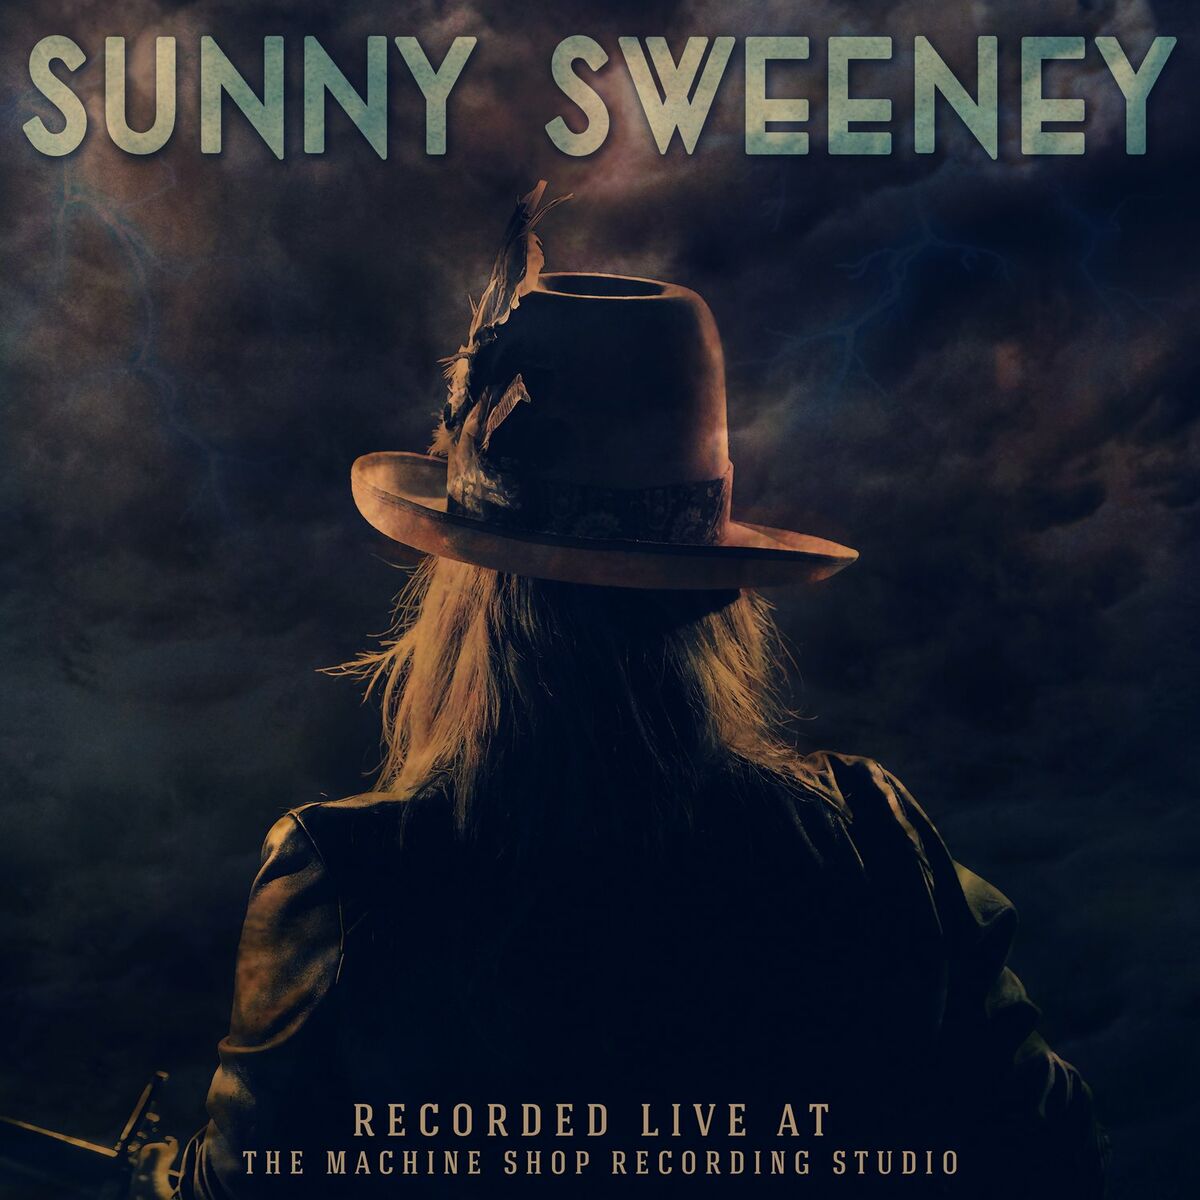 Sunny Sweeney: albums